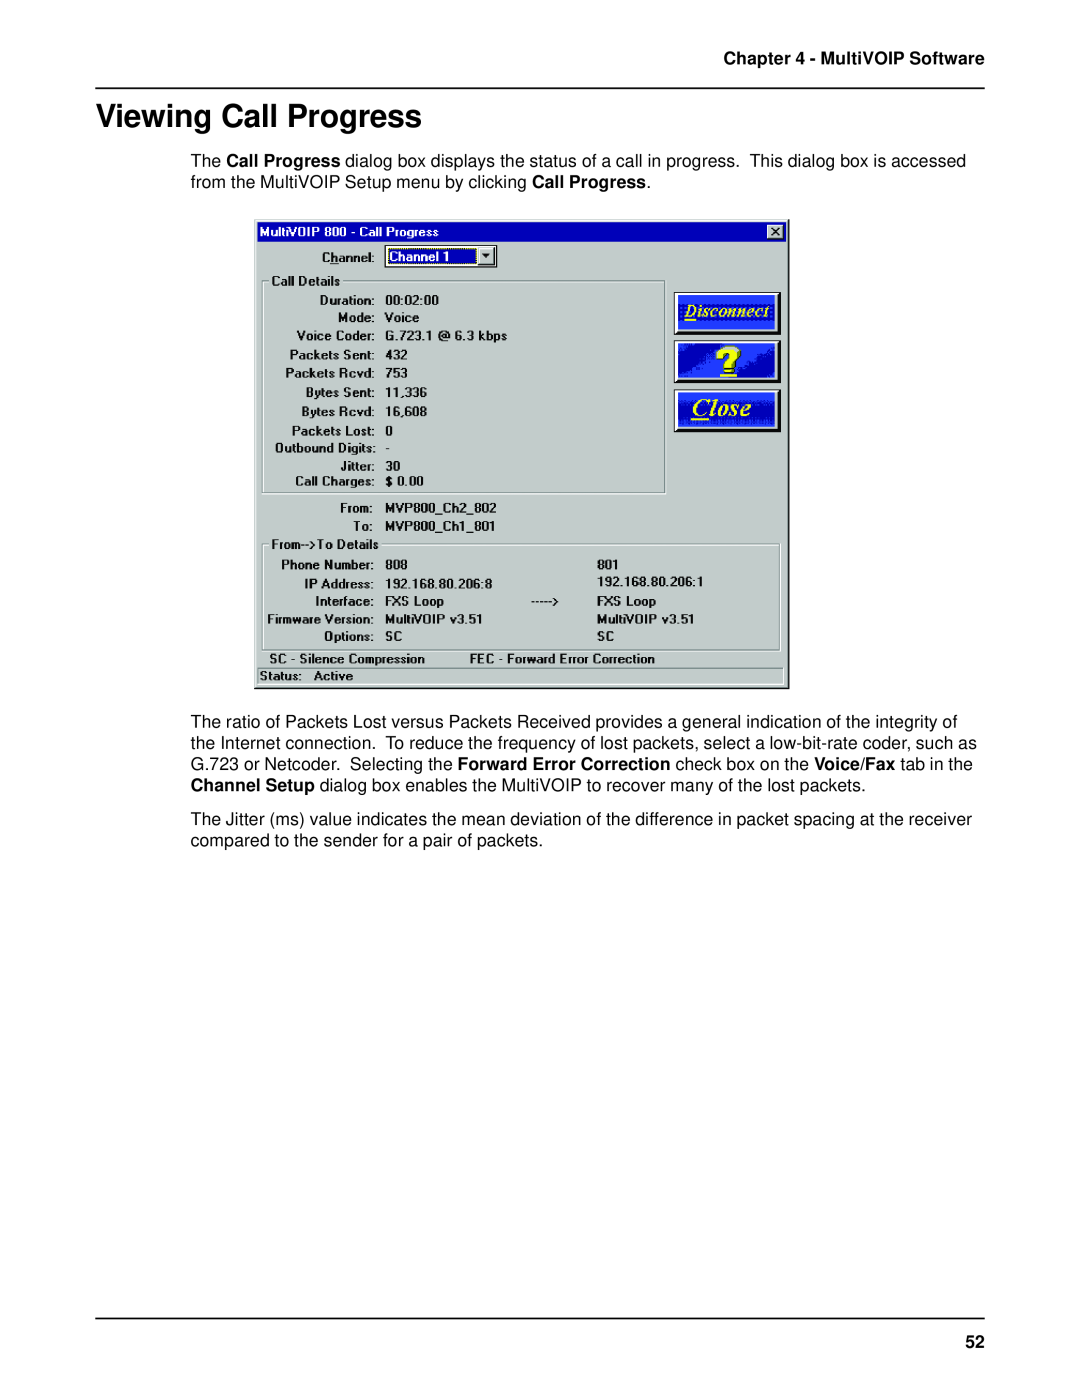 Multi-Tech Systems MVP 800 manual Viewing Call Progress, MultiVOIP Software 